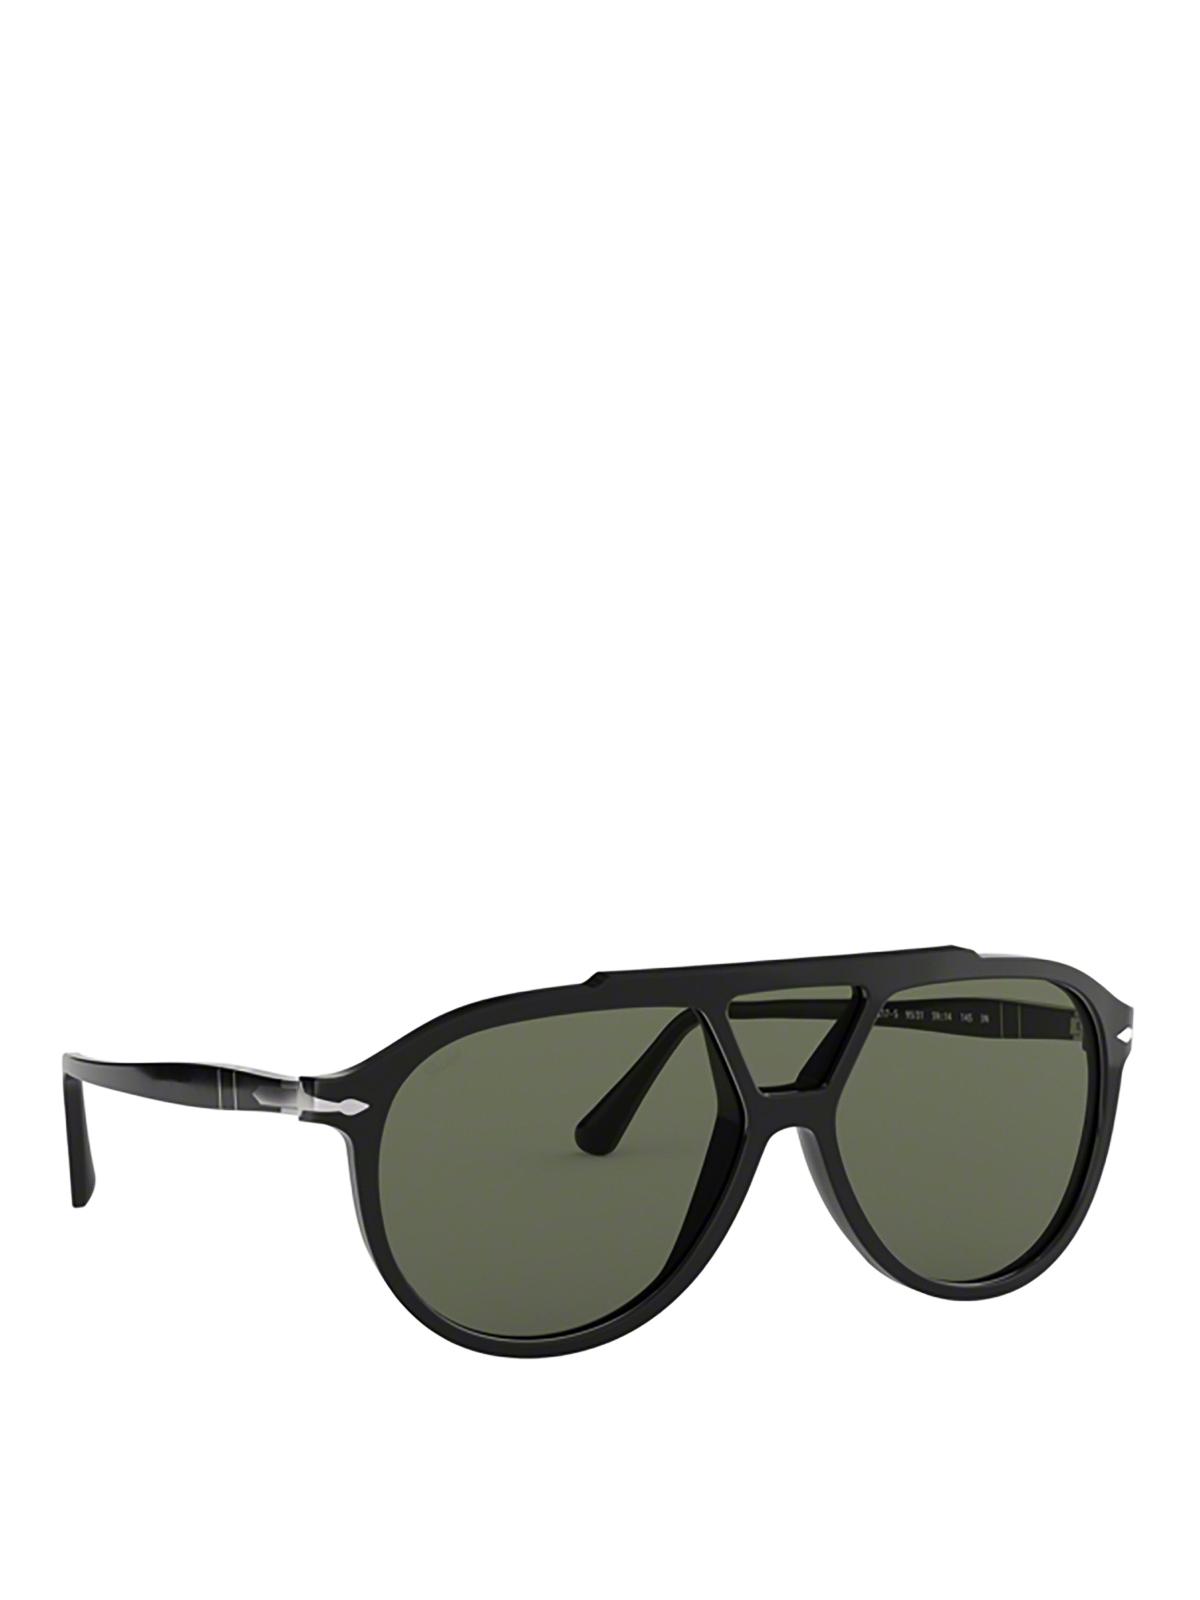 Persol Aviator Sunglasses in Black for Men - Save 7% - Lyst